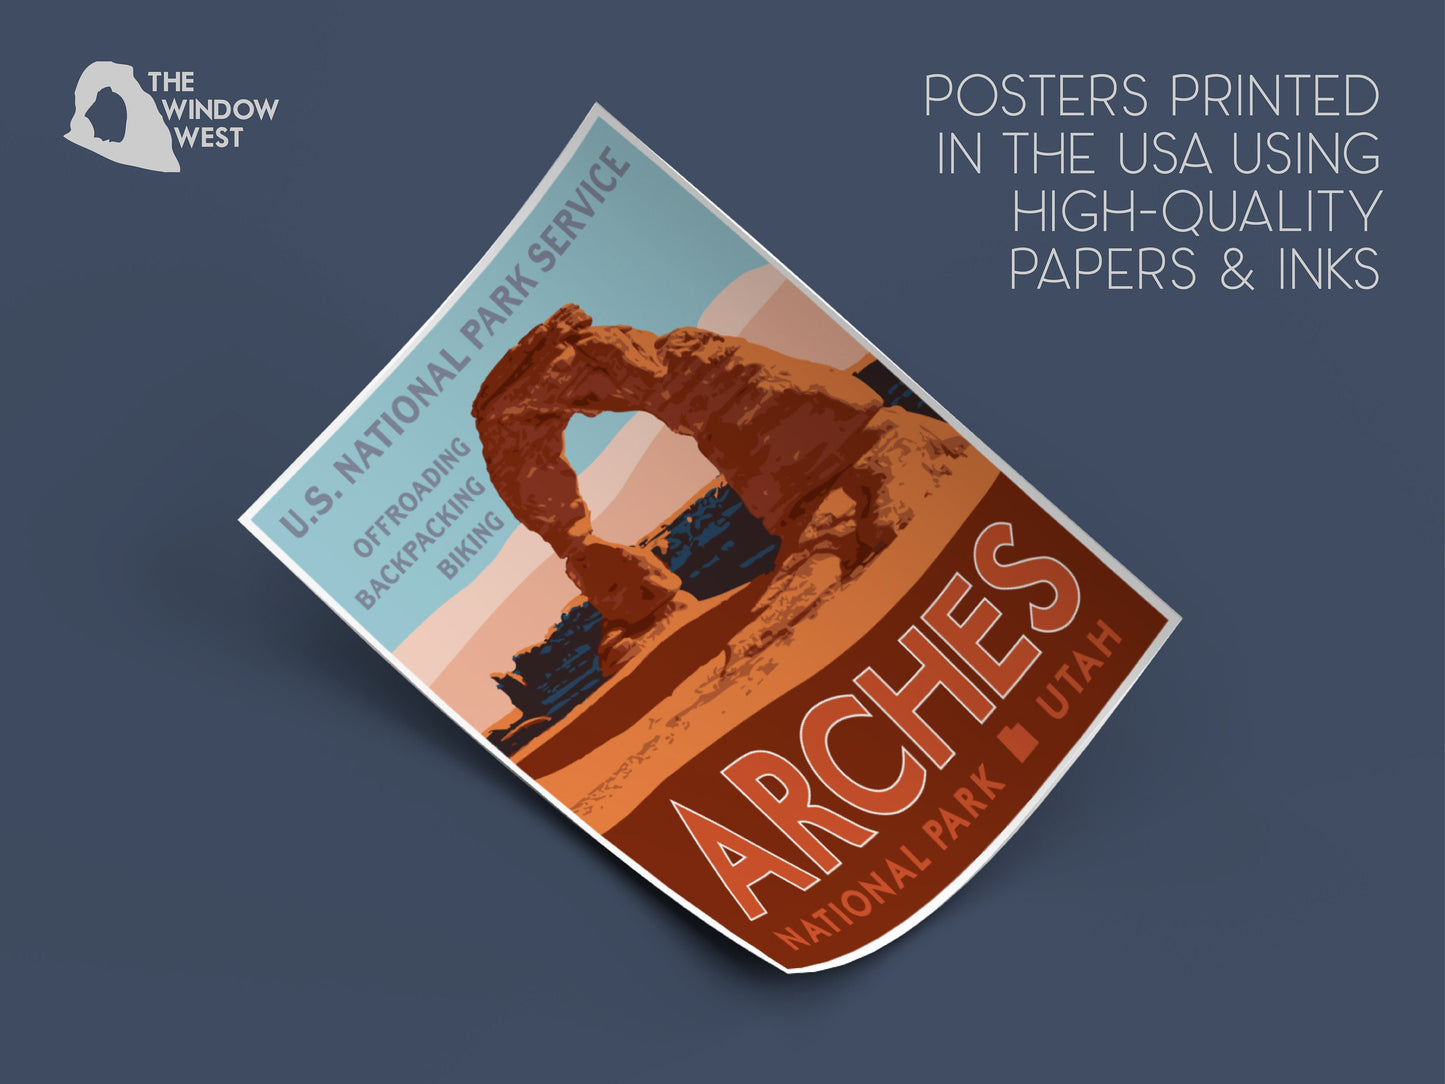 Arches National Park Travel Poster, Utah National Park Travel Print, Arches National Park Print, Vintage Travel Poster, National Park Poster